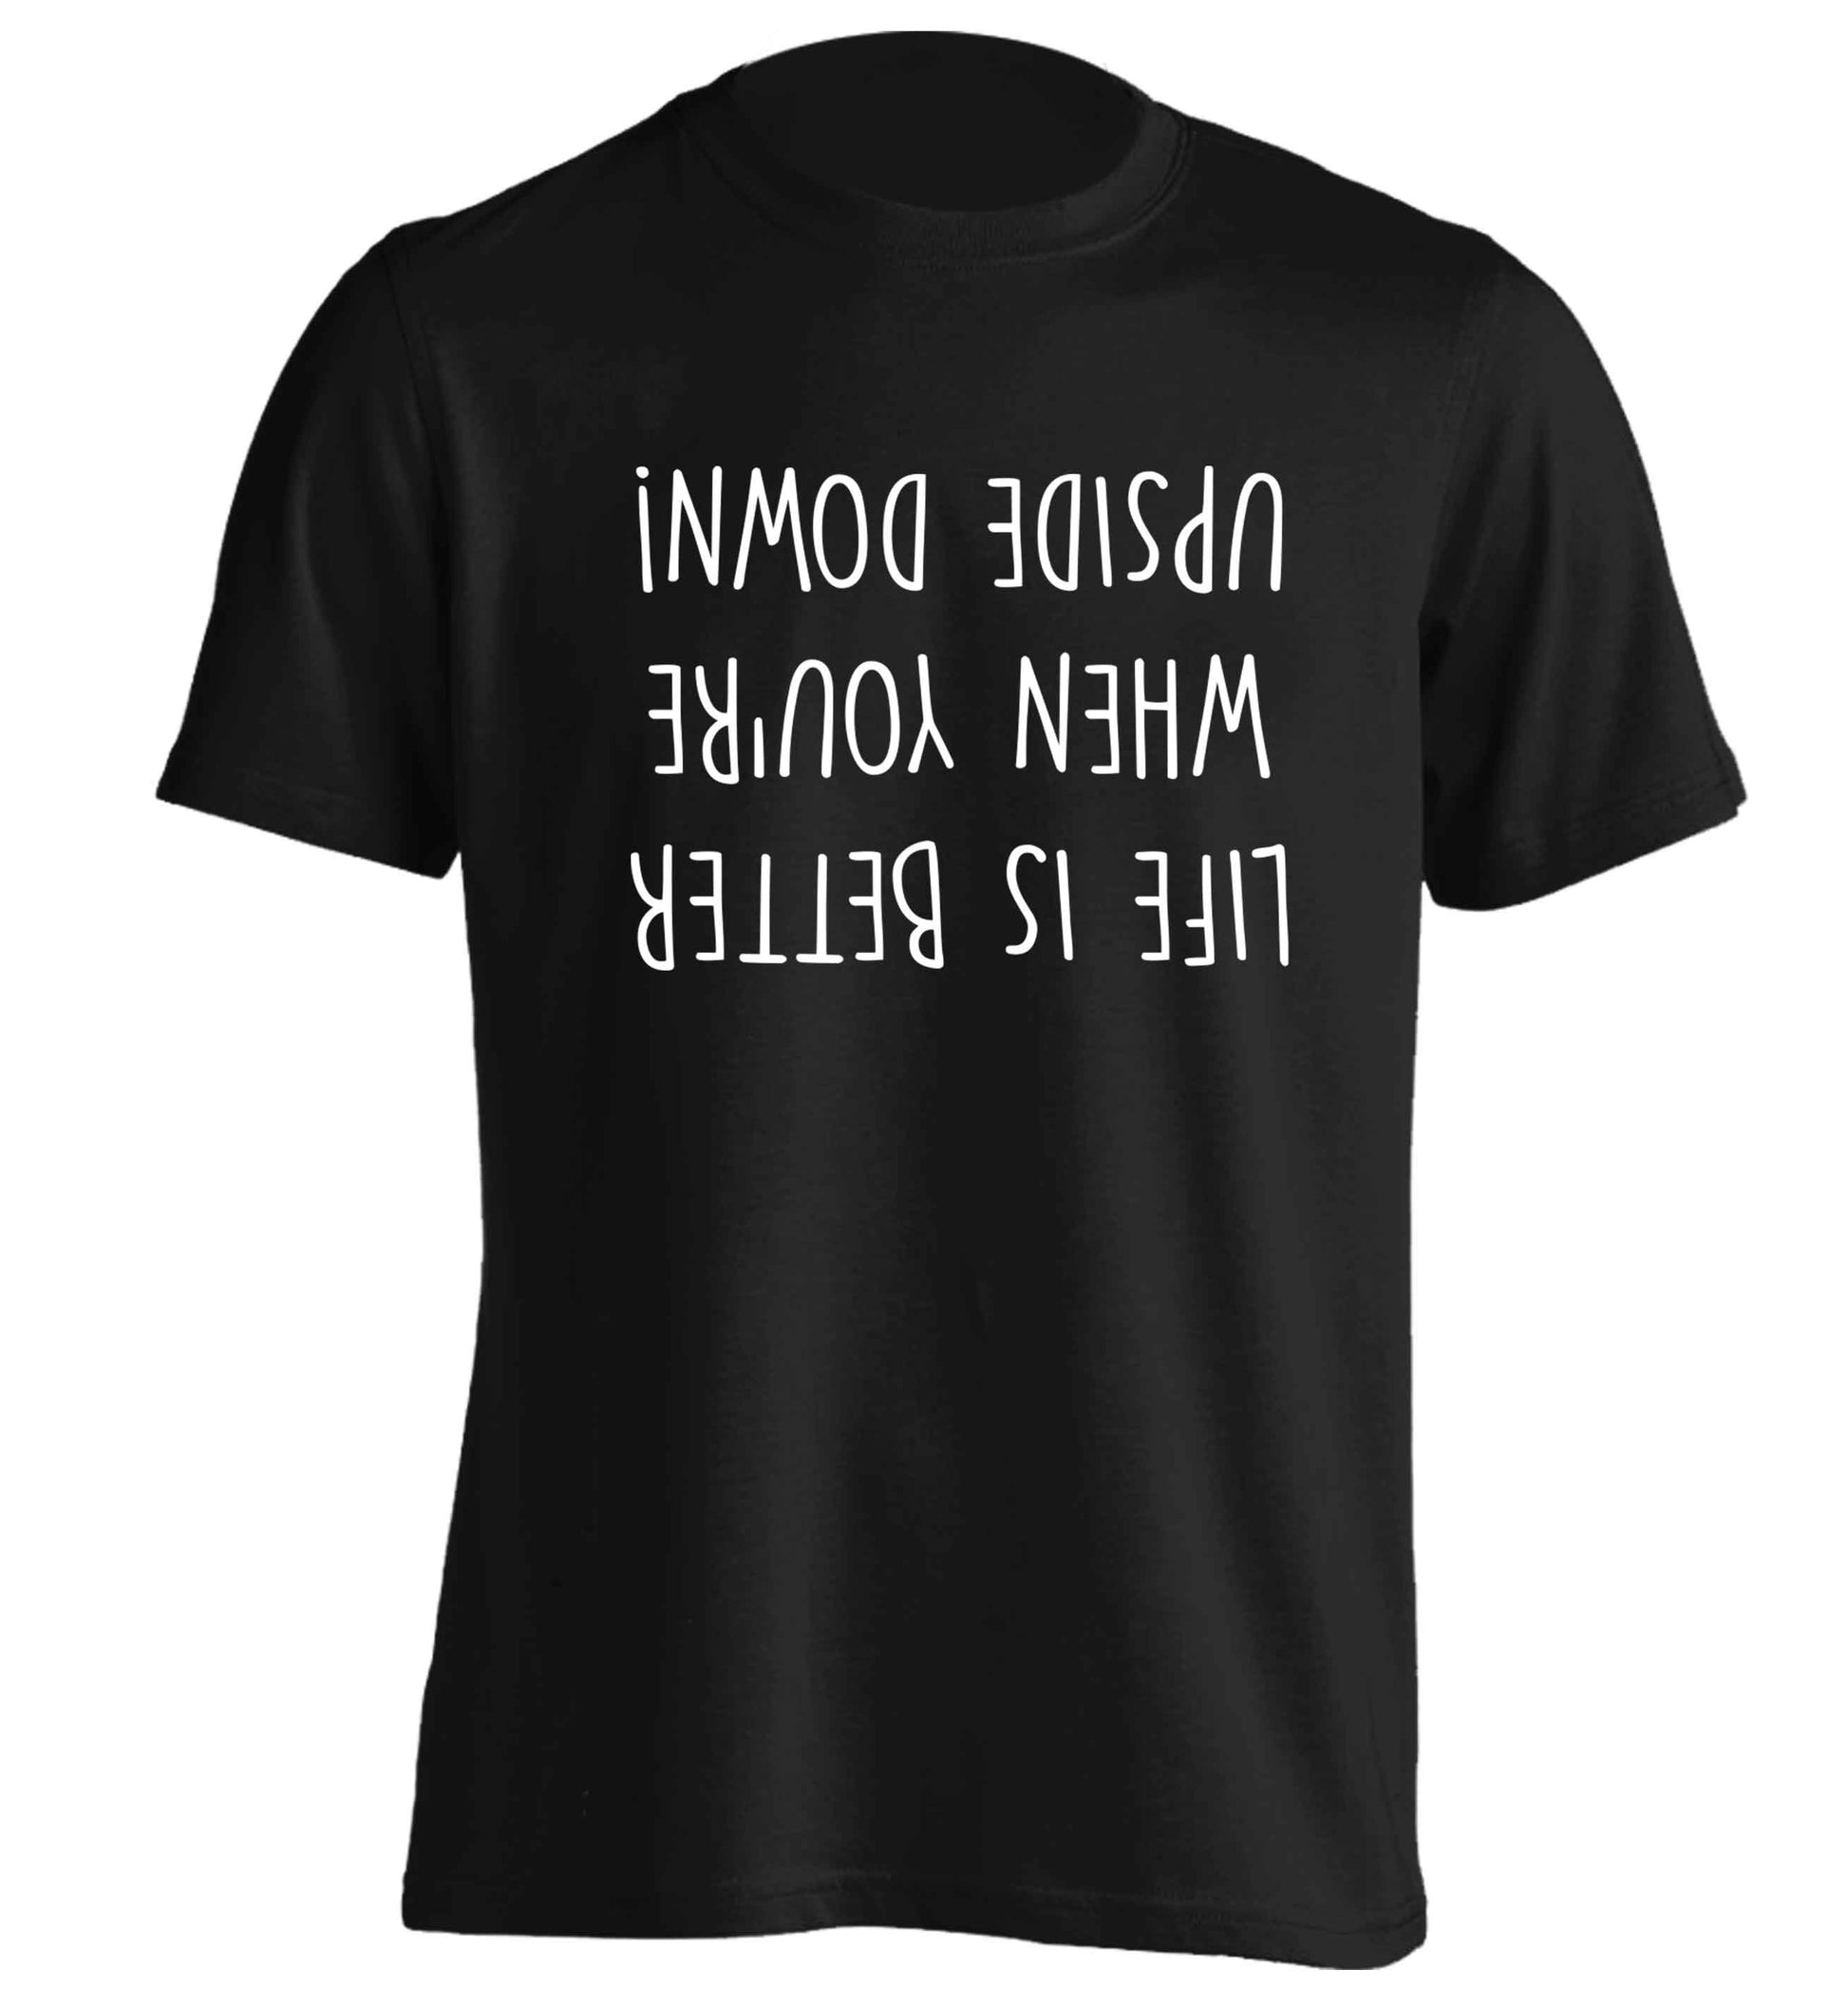 Life is better upside down adults unisex black Tshirt 2XL